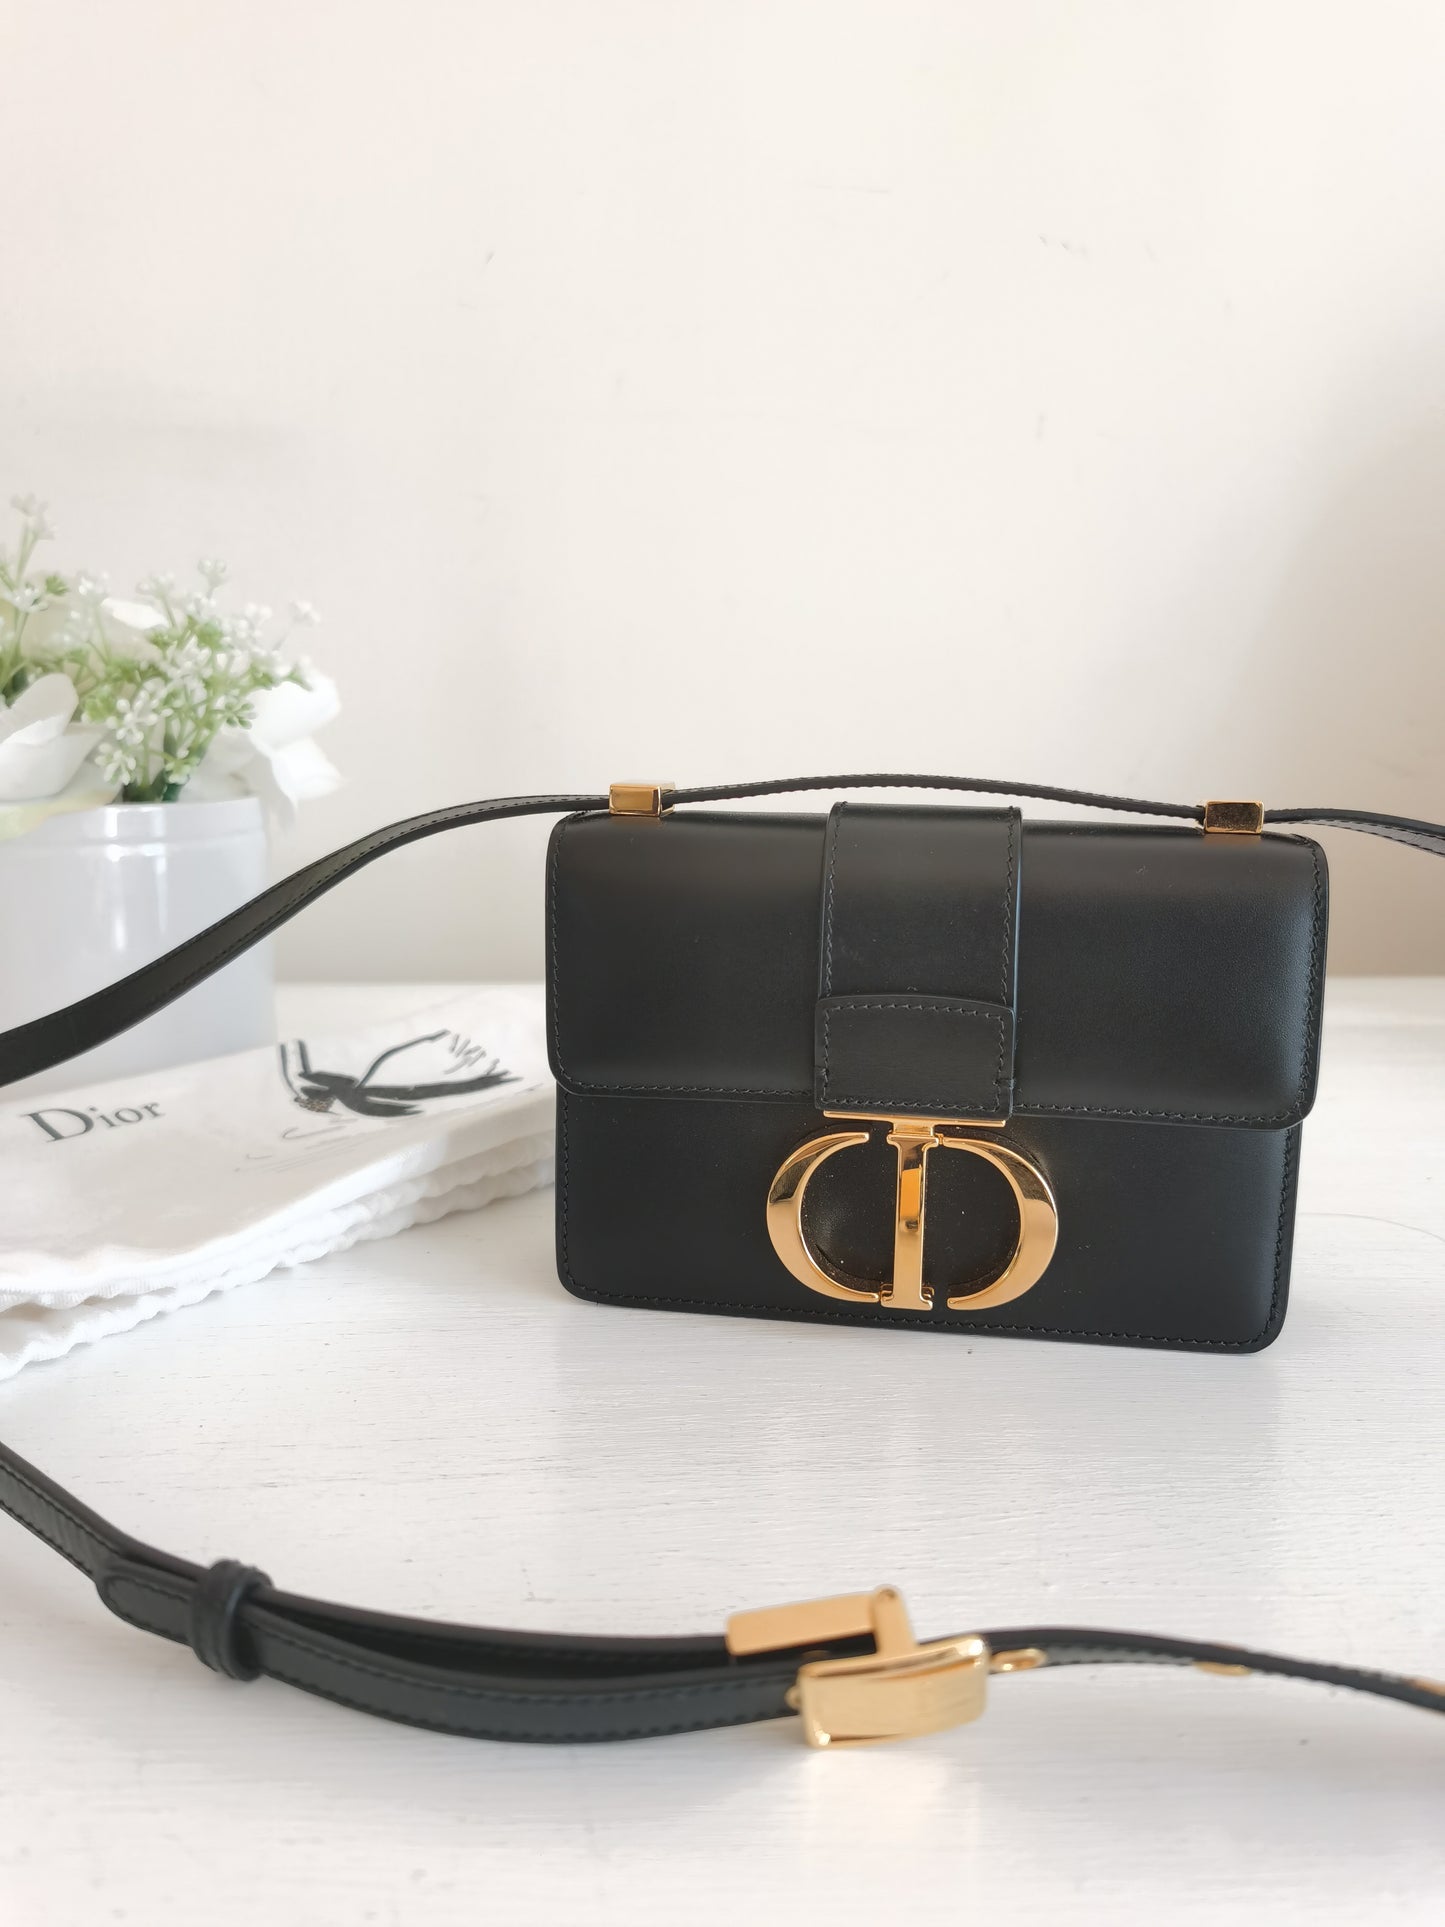 Dior Micro 30 Montaigne Calfskin Bag in Smooth Black Calfskin